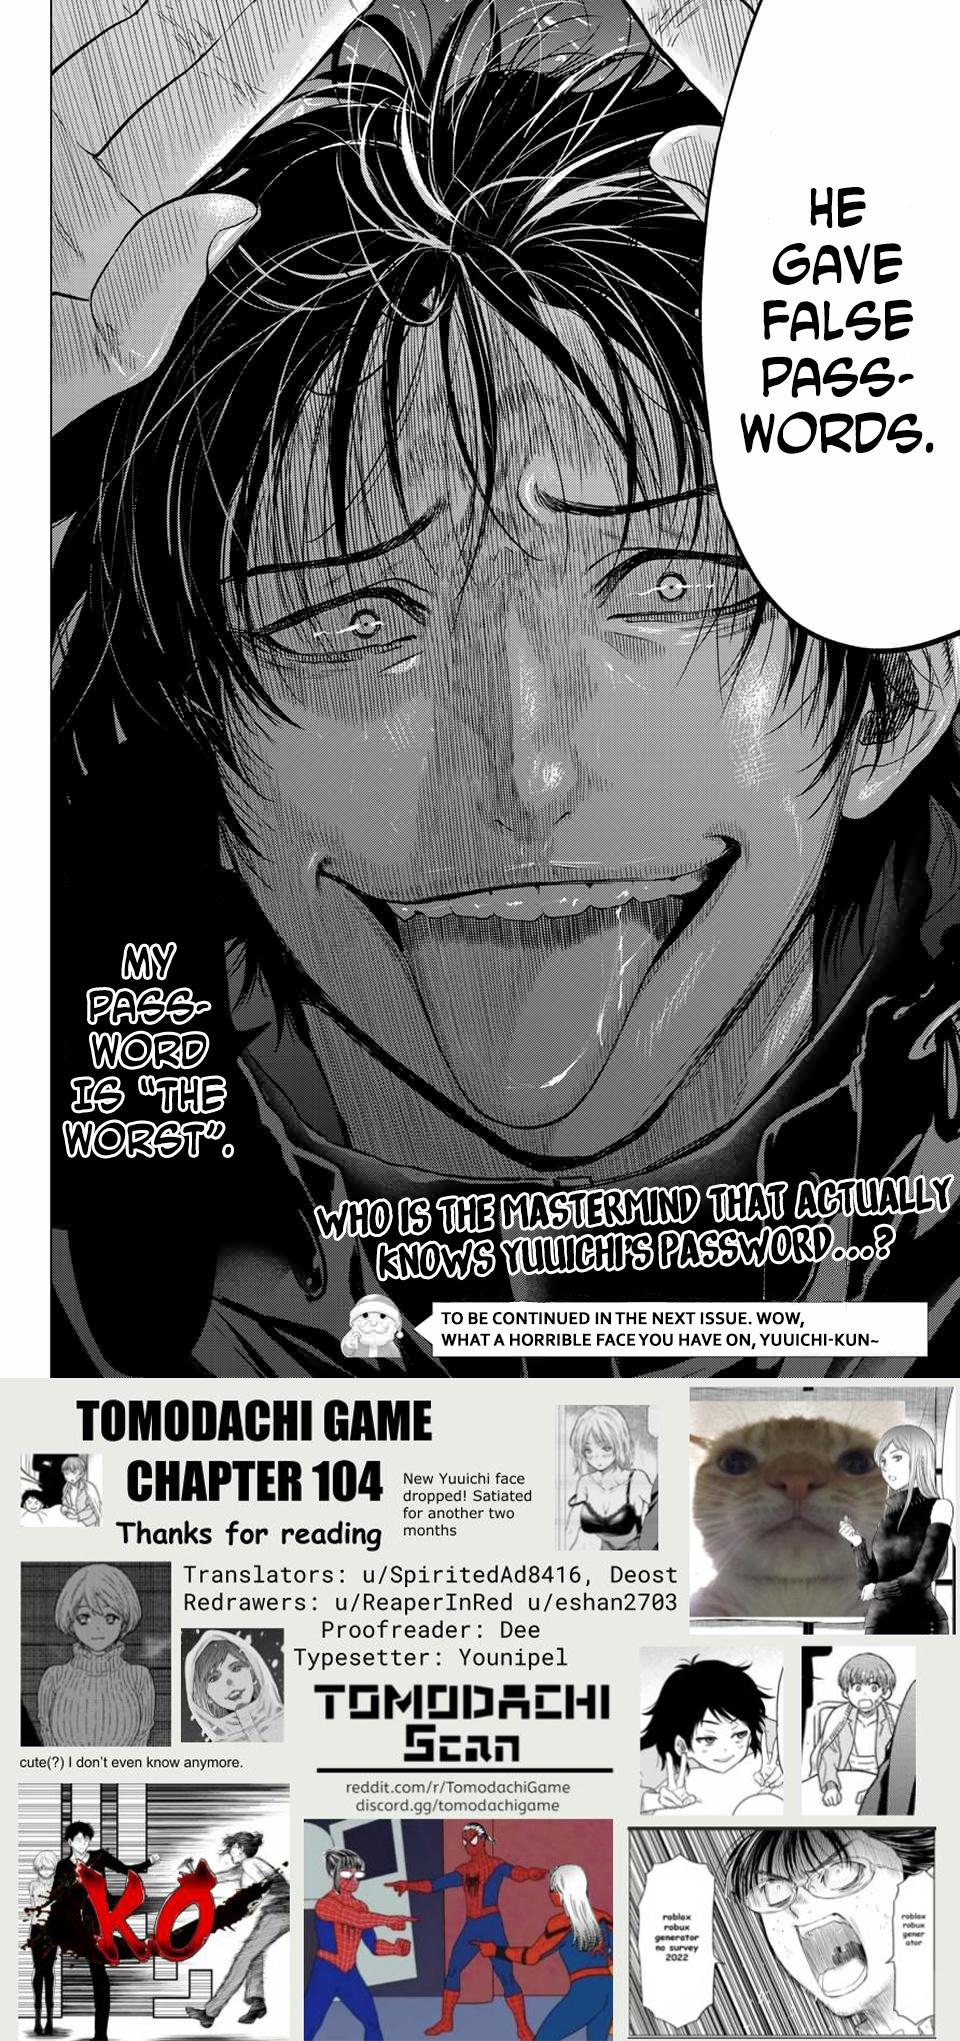 Tomodachi Game Manga Last Chapter